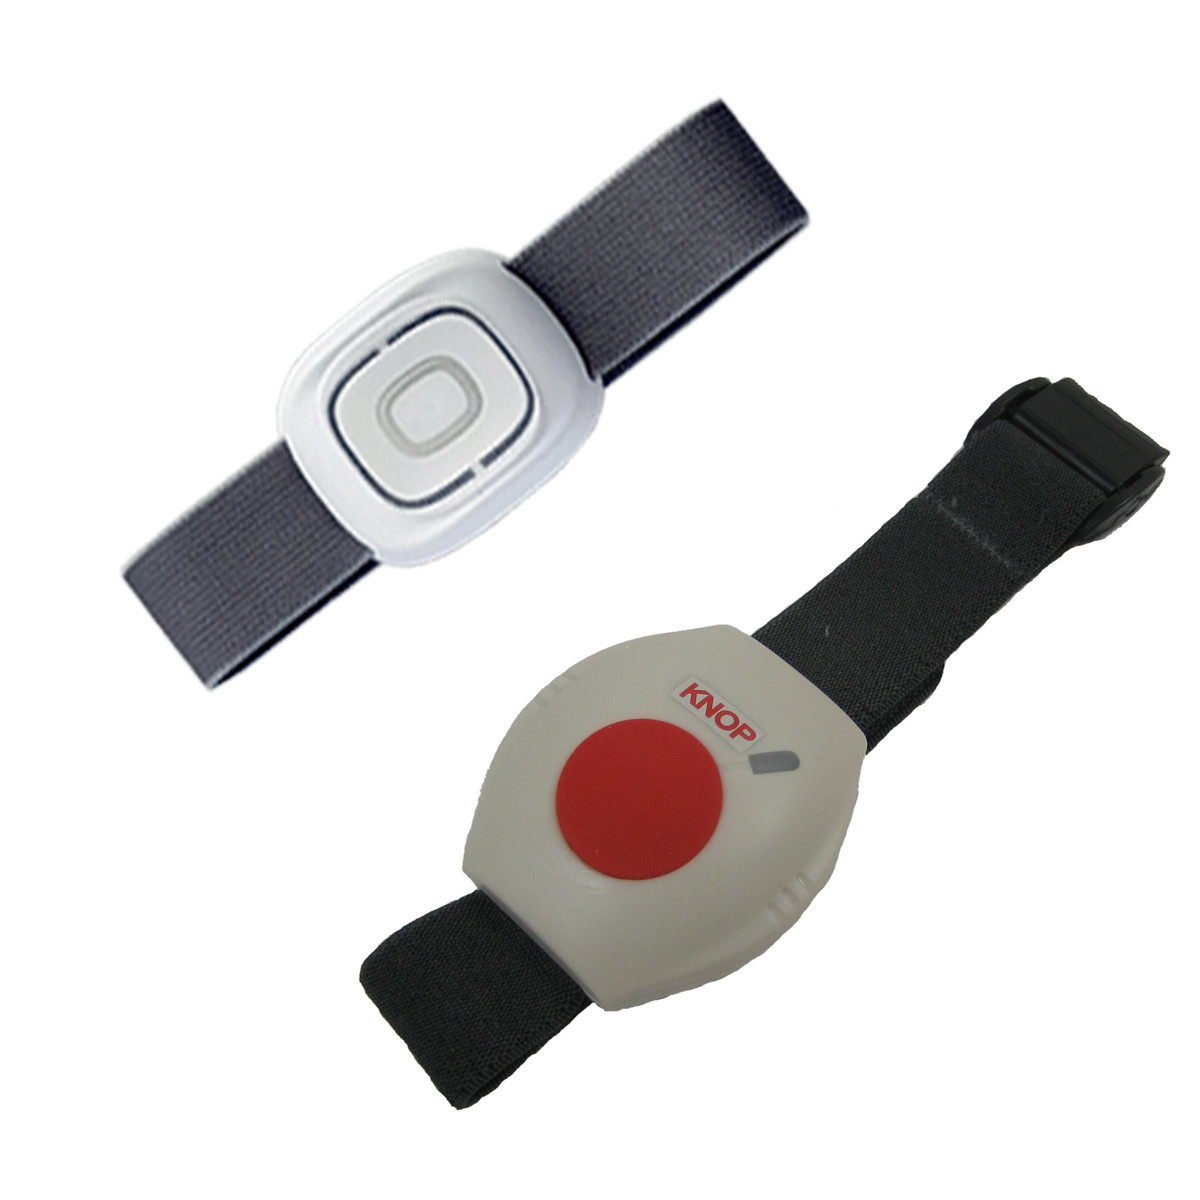 Pulseras elásticas para GPS para niños o discapacitados